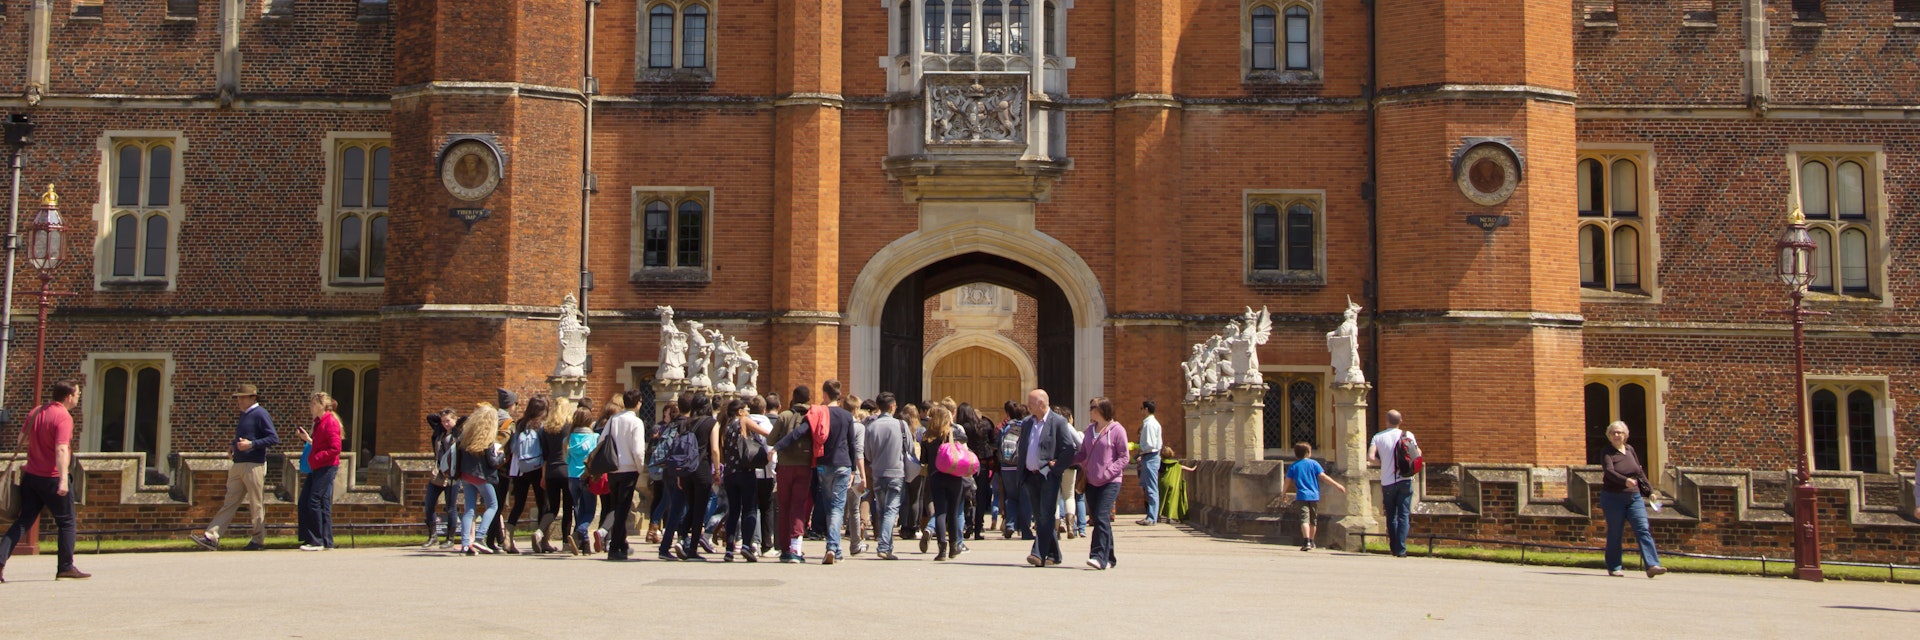 The main entrance to Hampton Court Palace, Richmond, London, England.